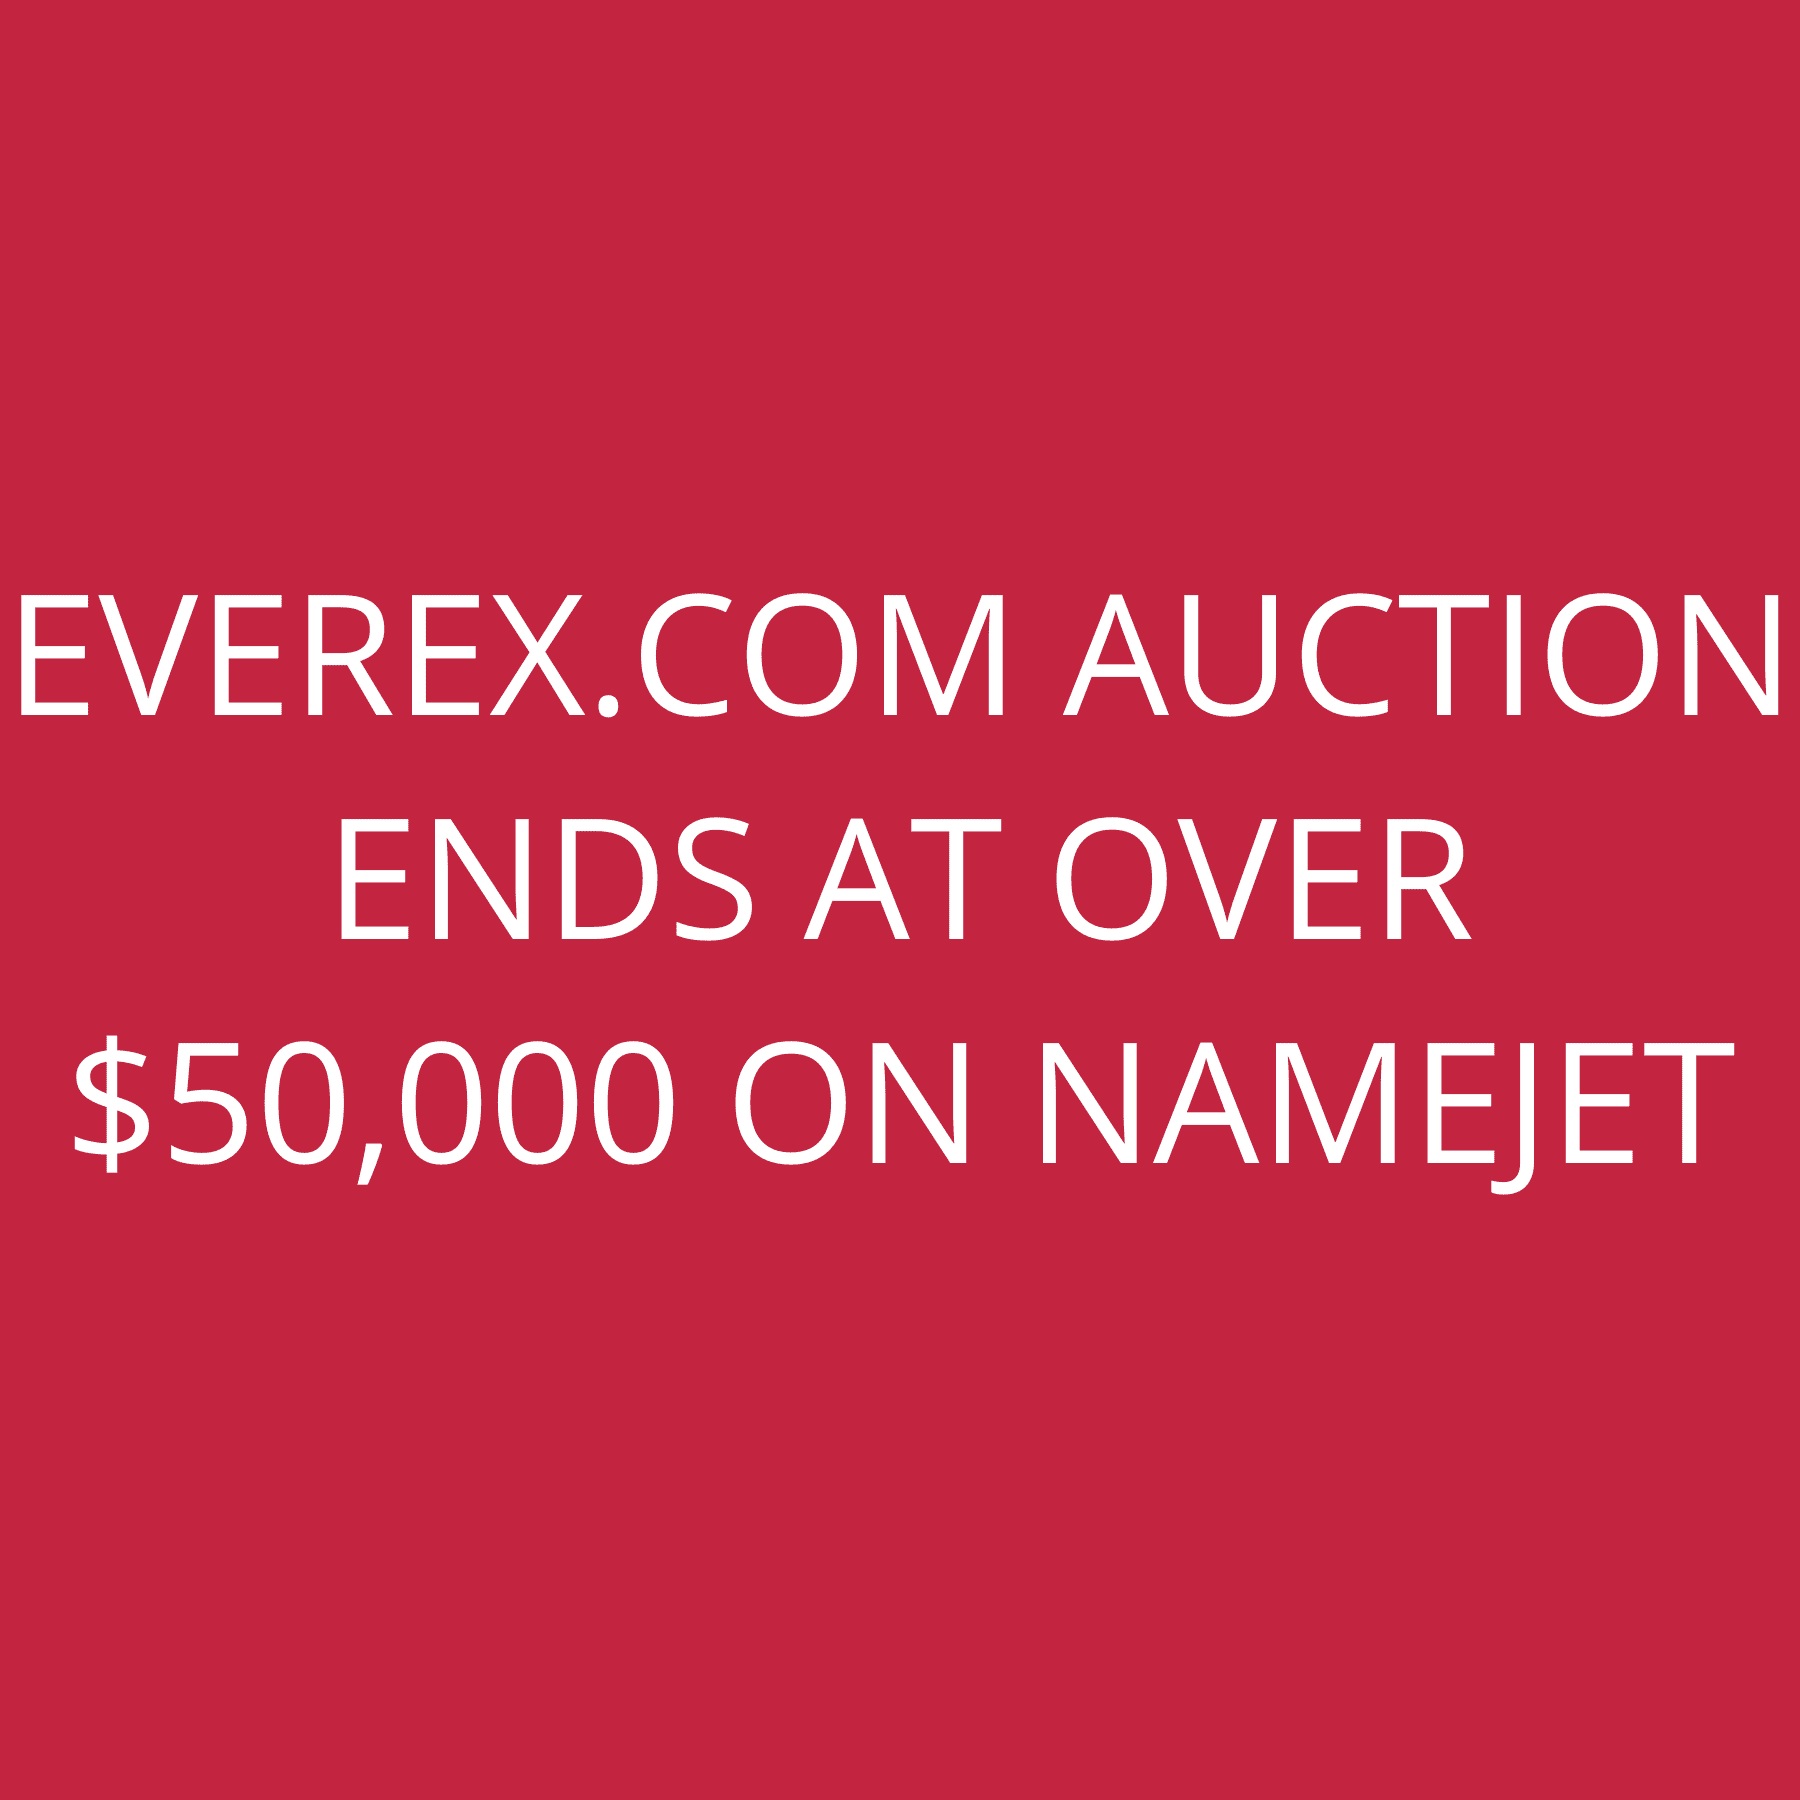 Everex.com Auction ends at over $50,000 on NameJet